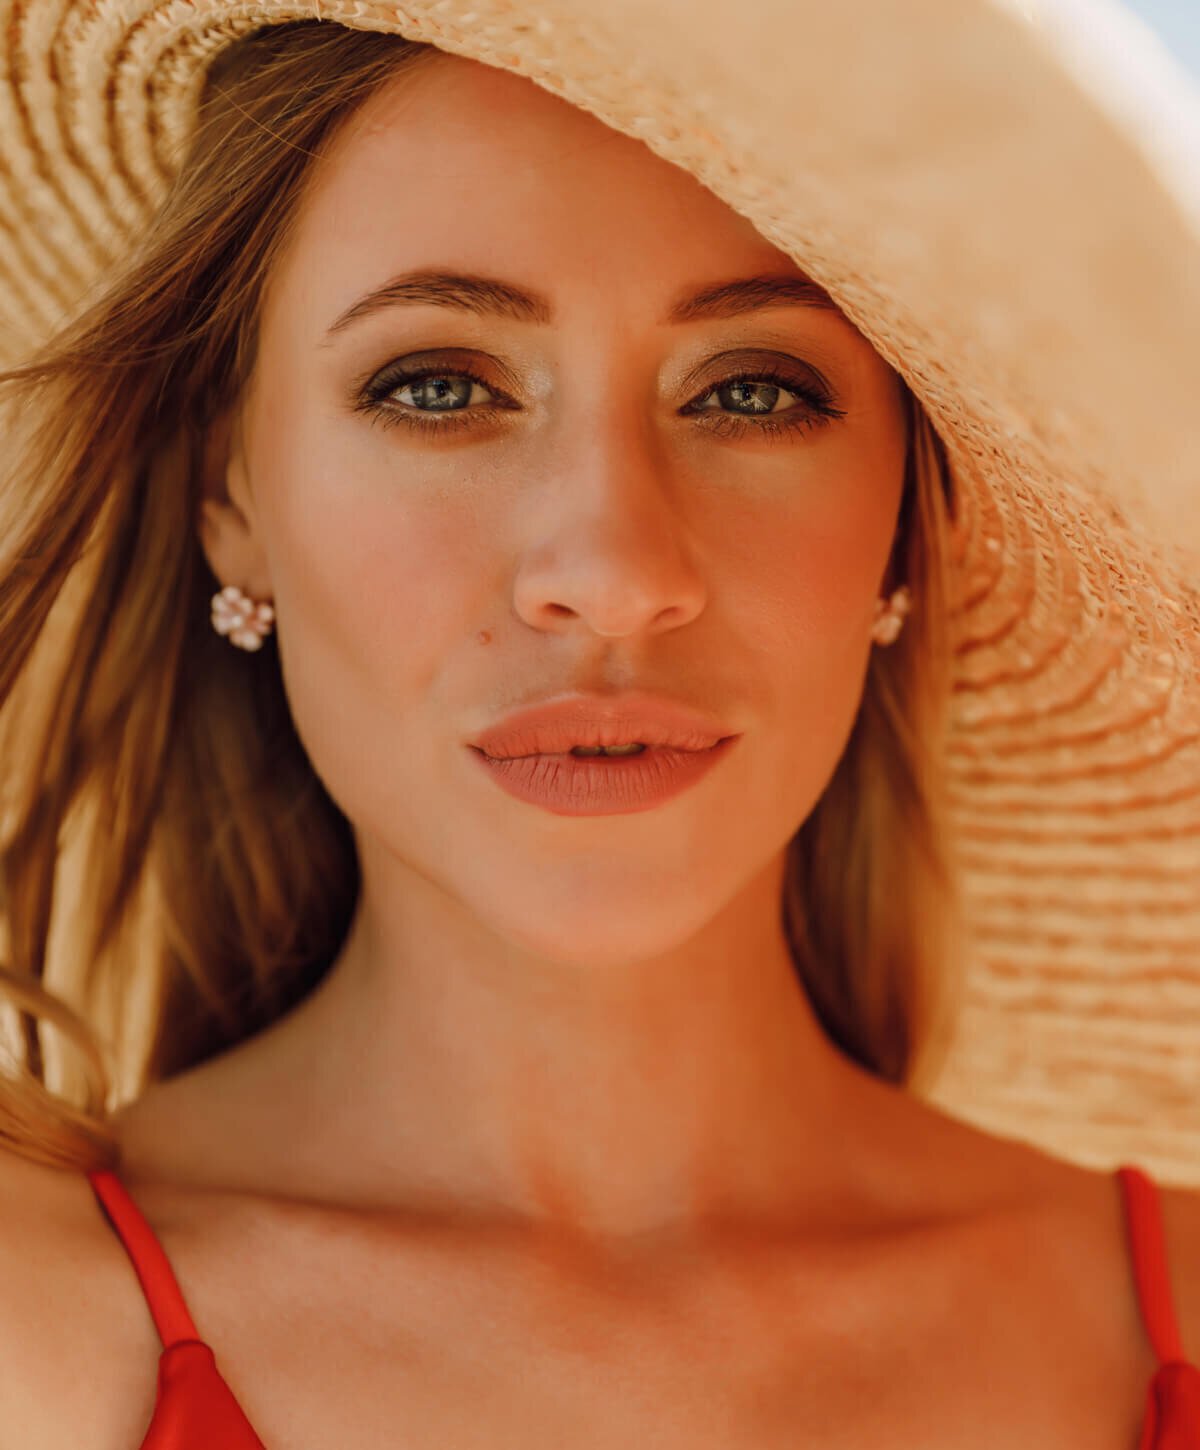 Vero Beach Restylane model wearing a hat